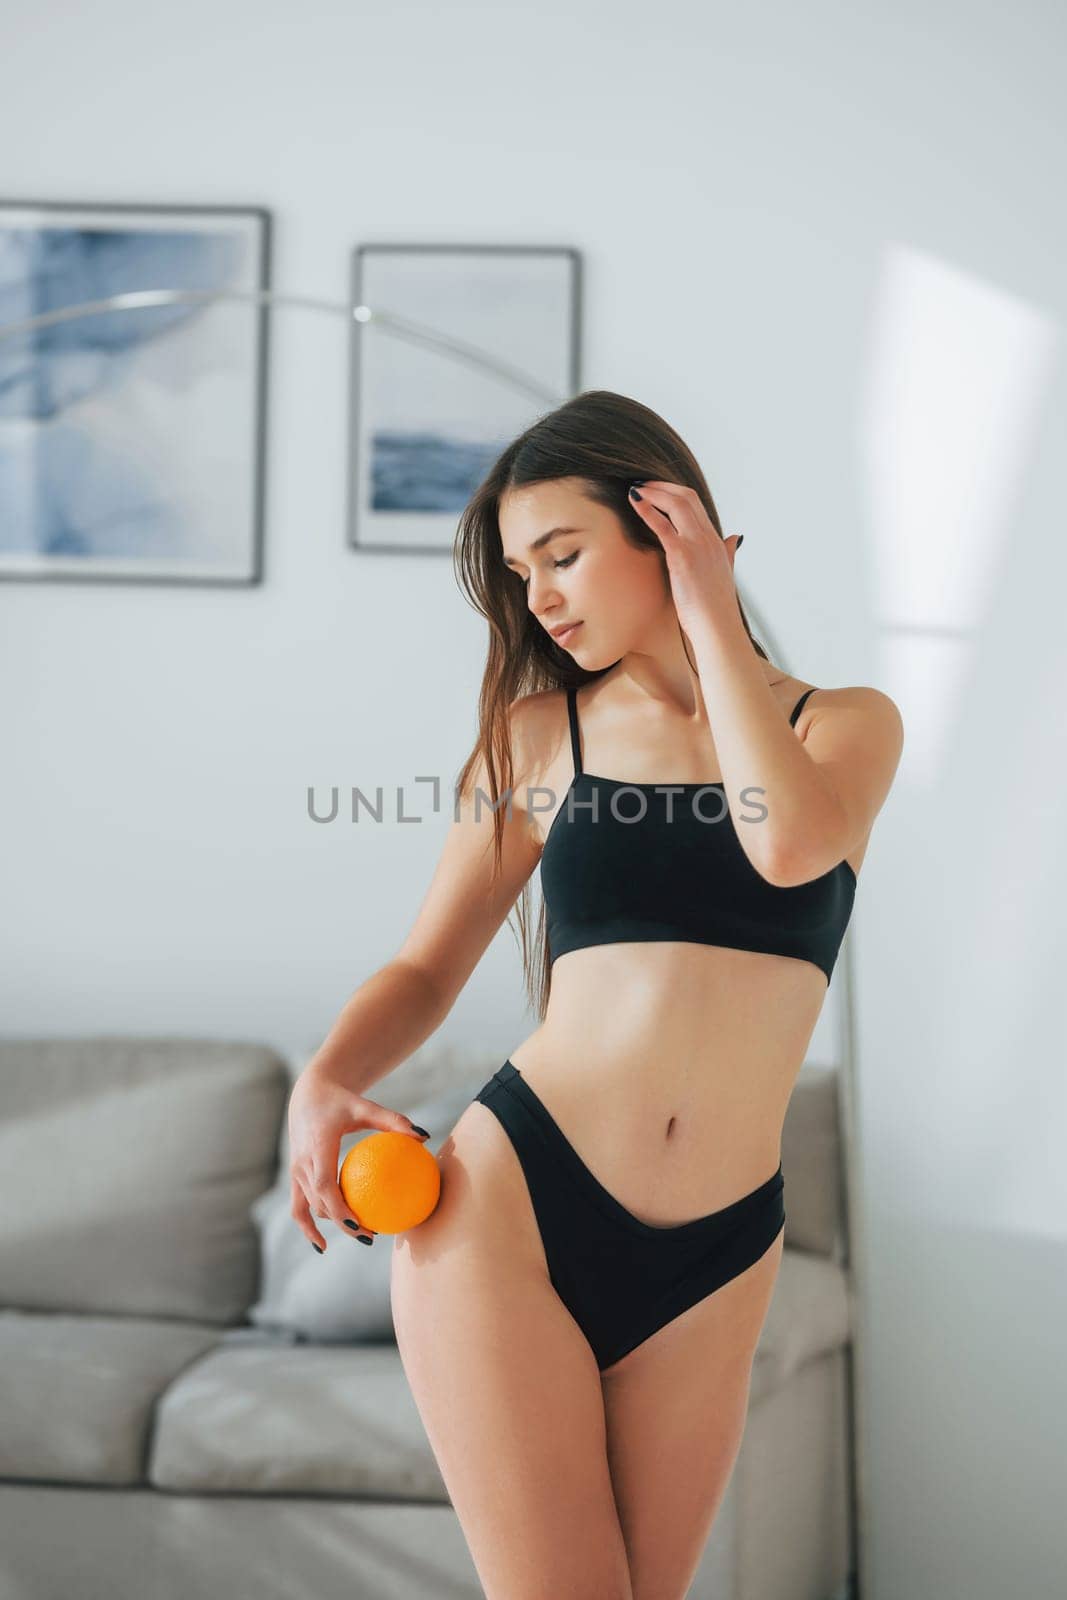 With orange in hand. Beautiful woman in underwear is posing indoors.